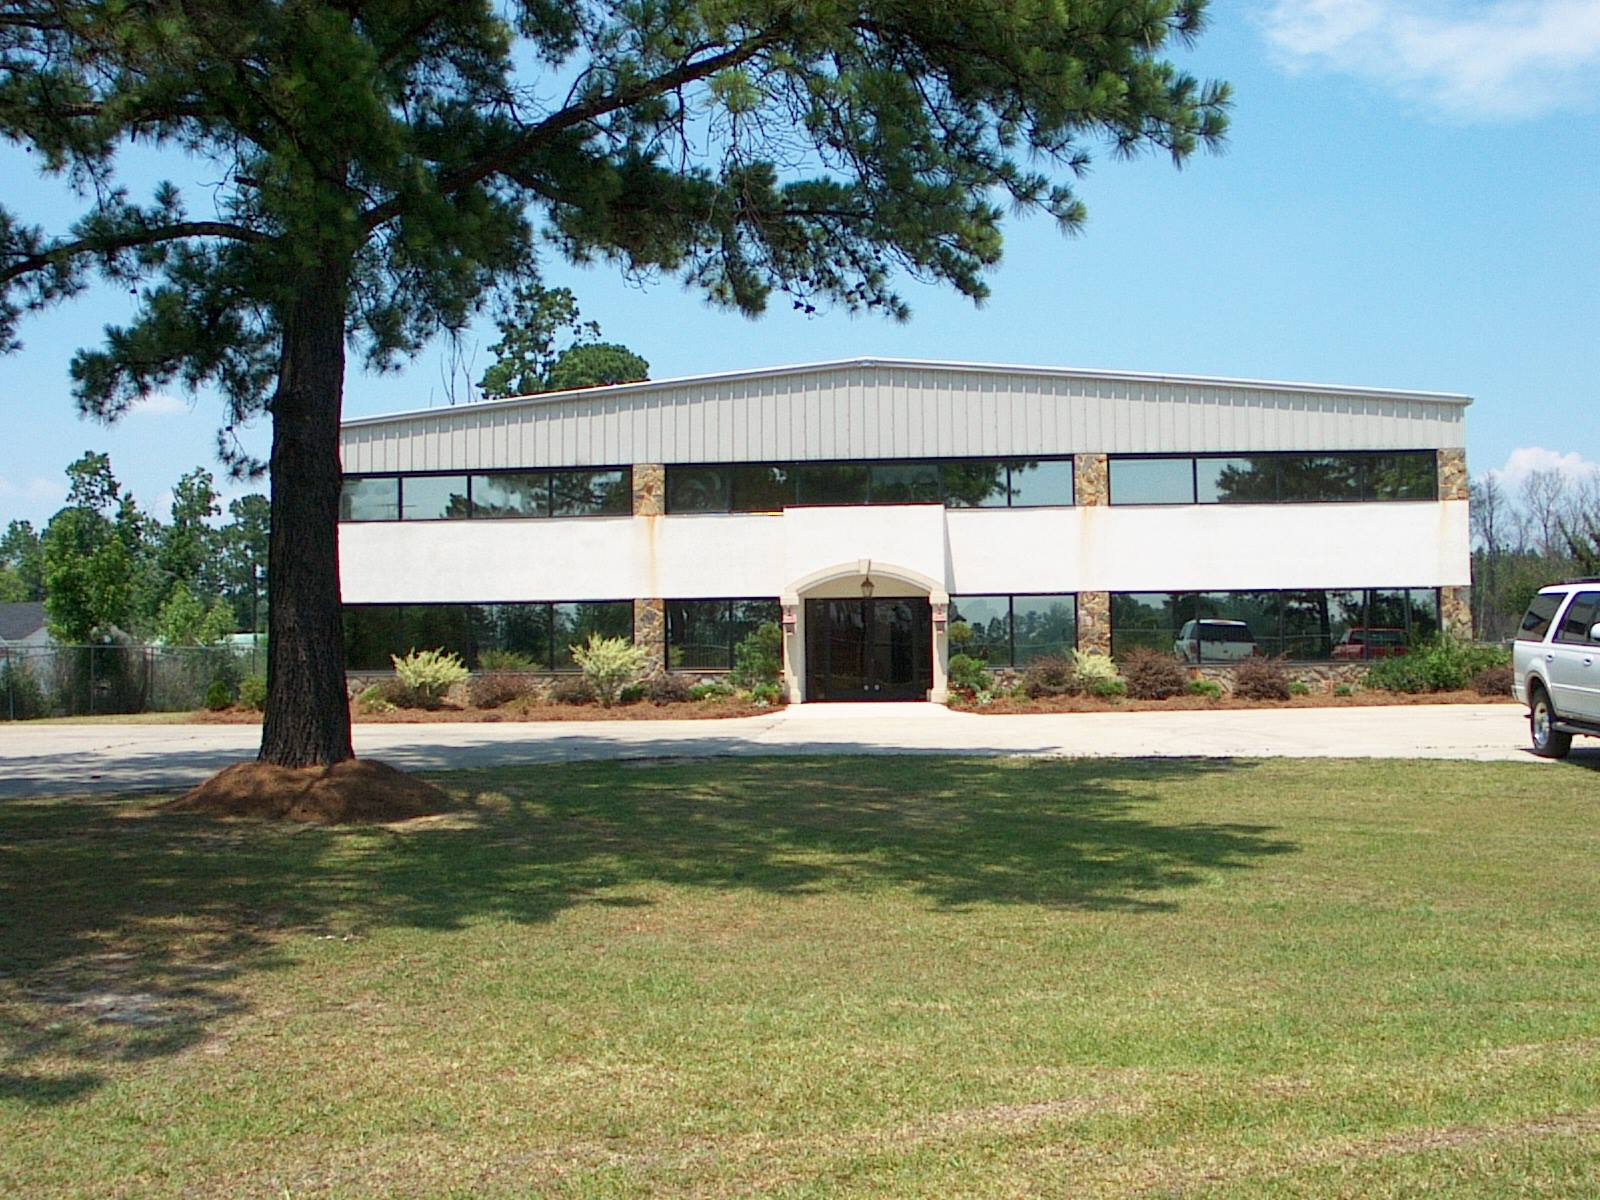 Image of the Porter Scientific Building